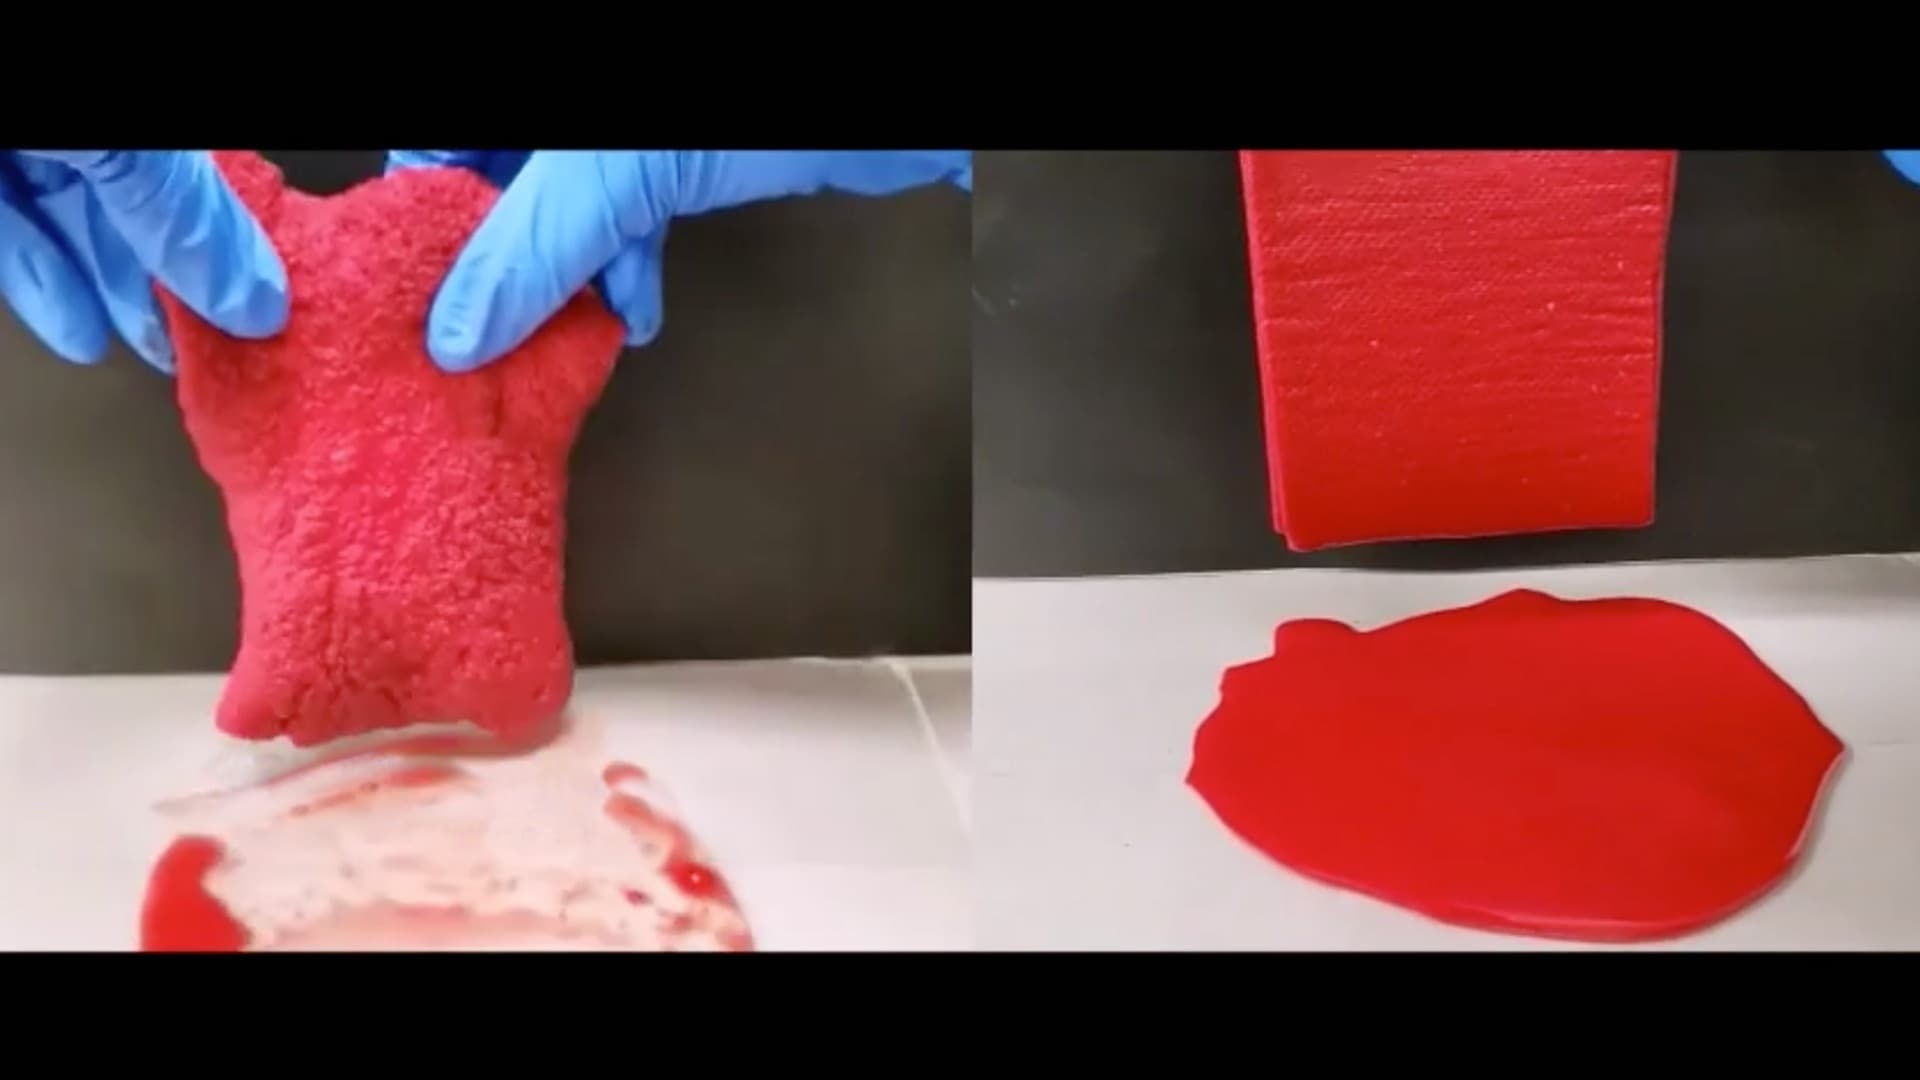 hydrogel sheet vs. gauze absorbing red liquid